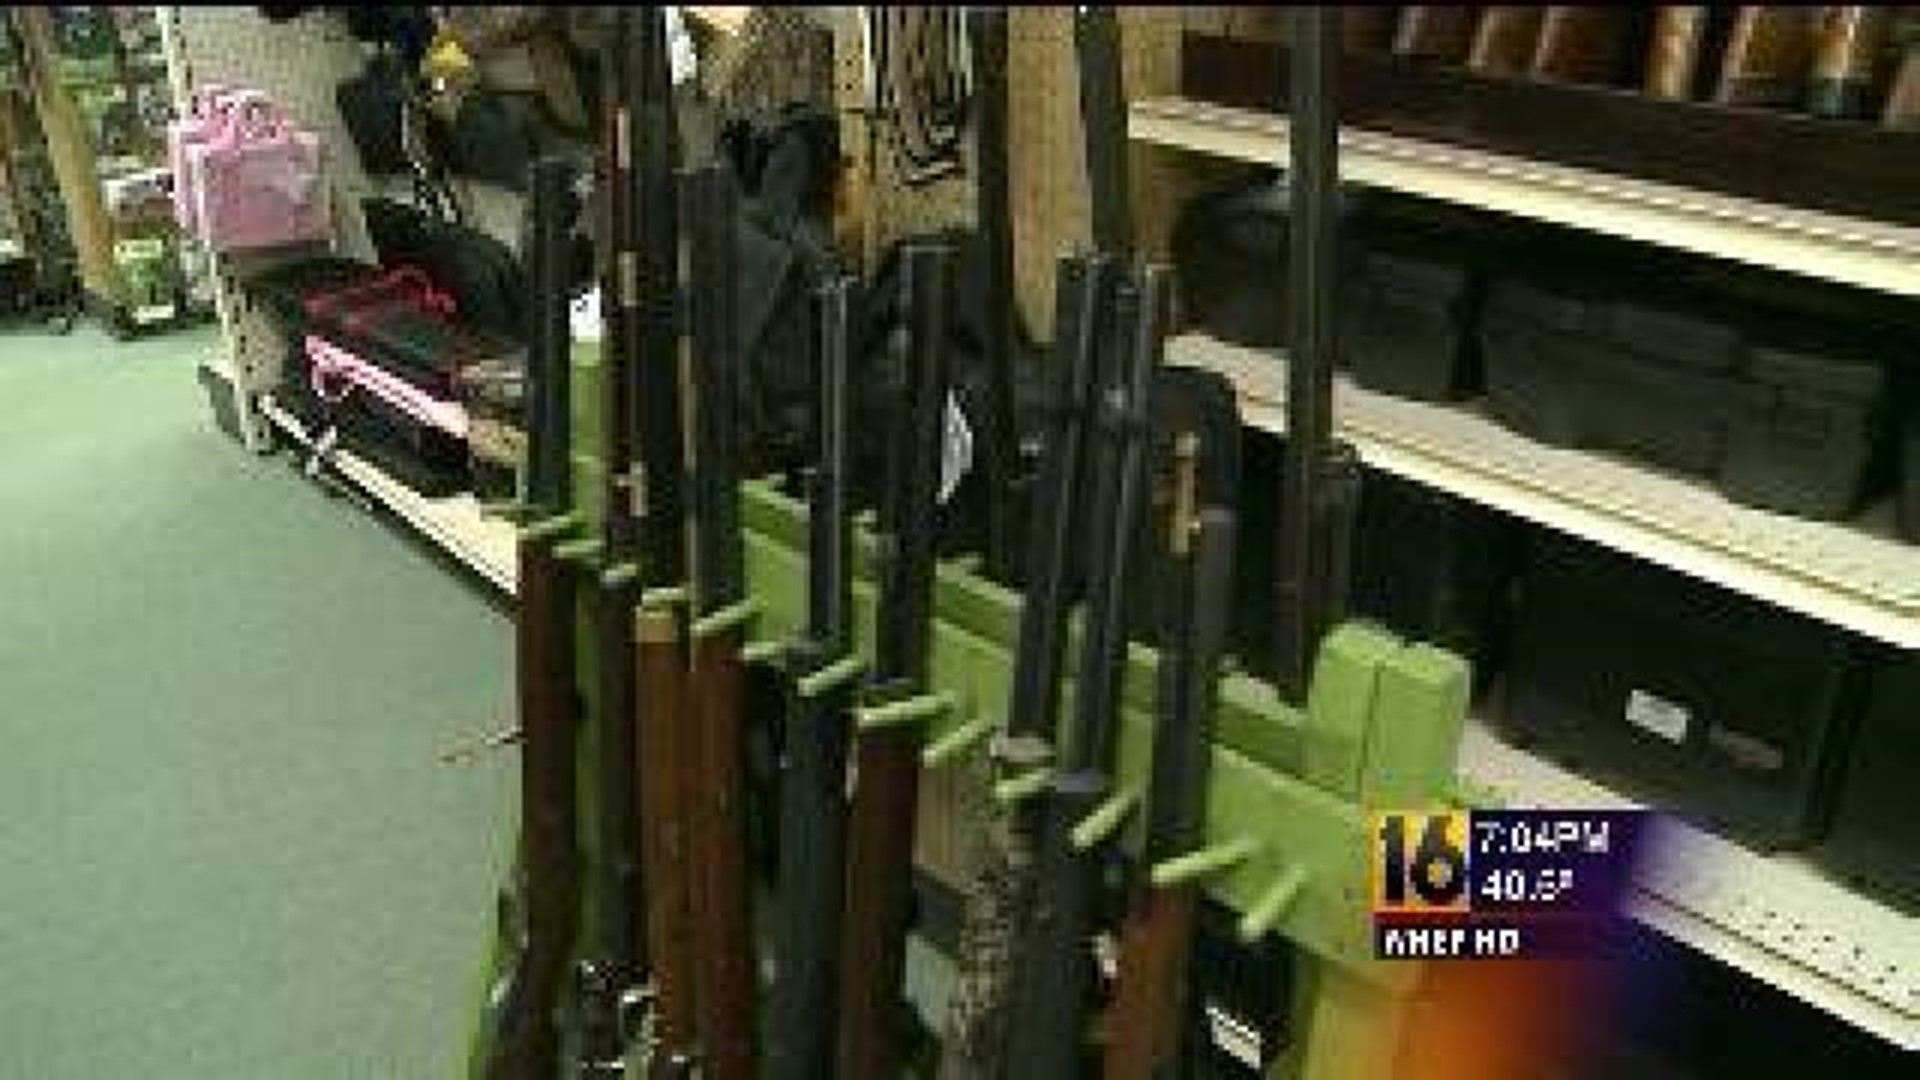 Gun Sales Up at Poconos Business